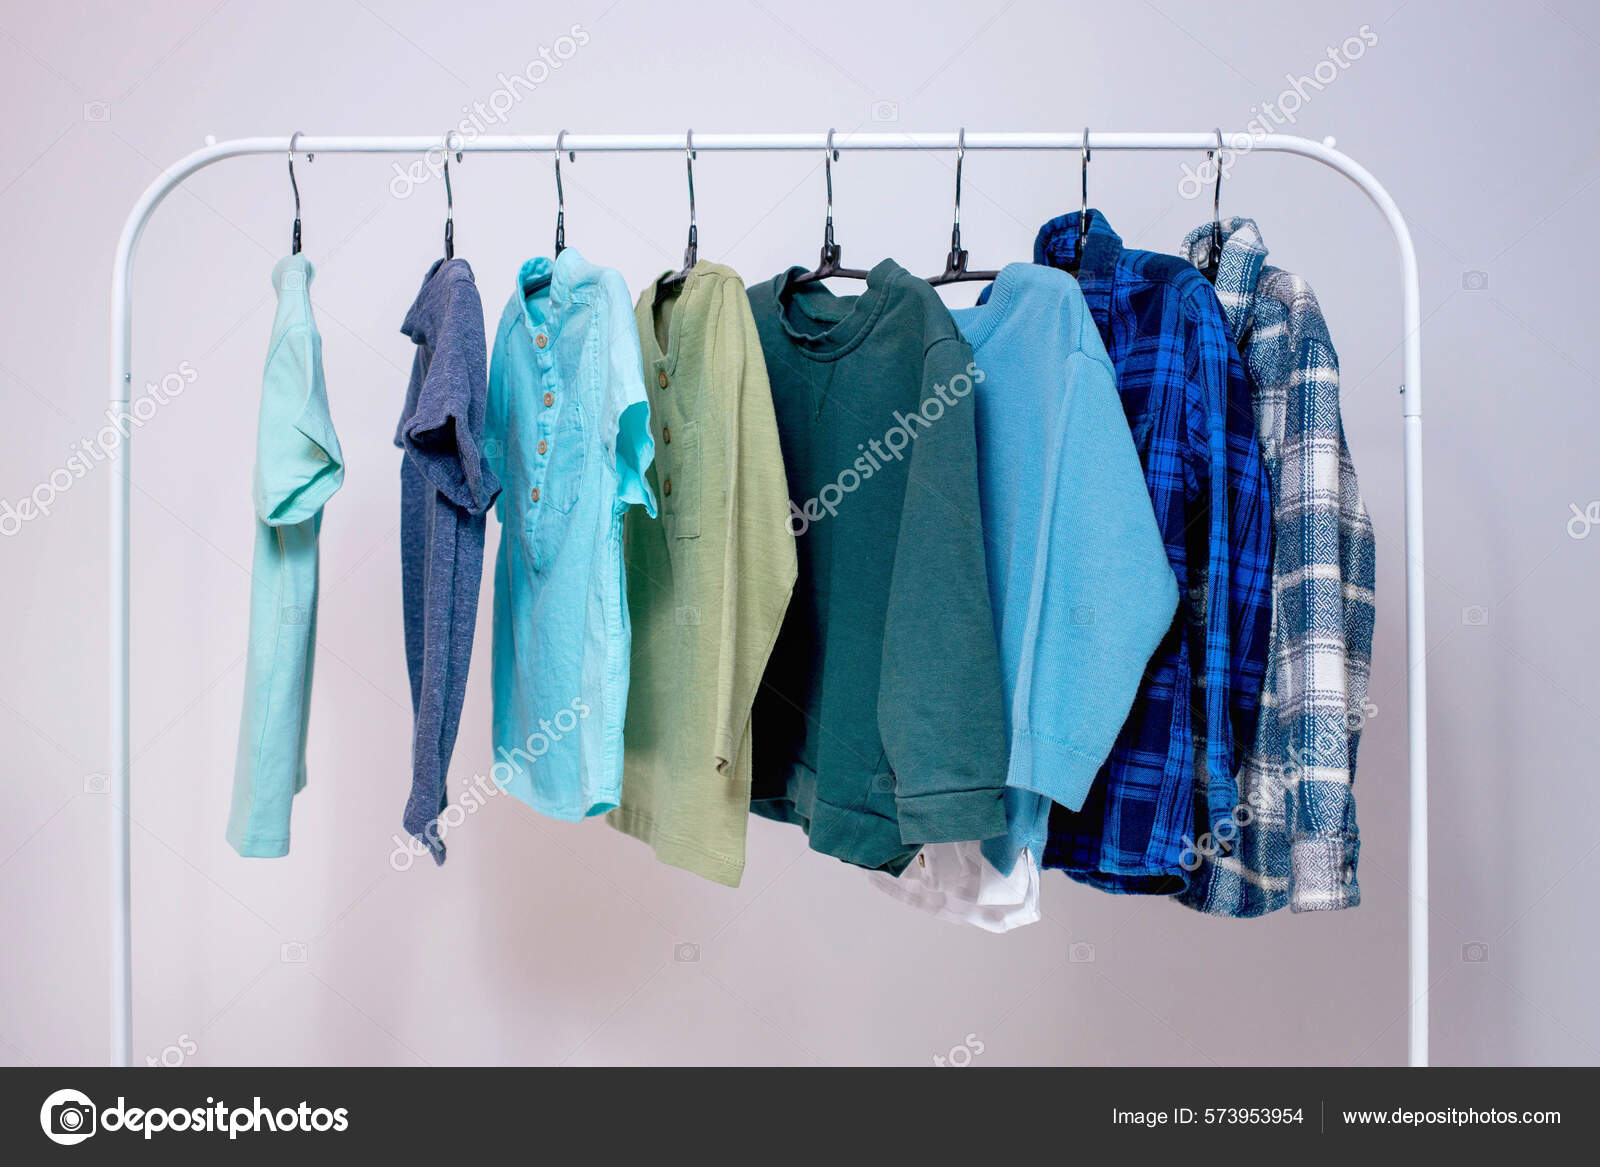 https://st.depositphotos.com/6844612/57395/i/1600/depositphotos_573953954-stock-photo-rack-stylish-children-clothes-hangers.jpg